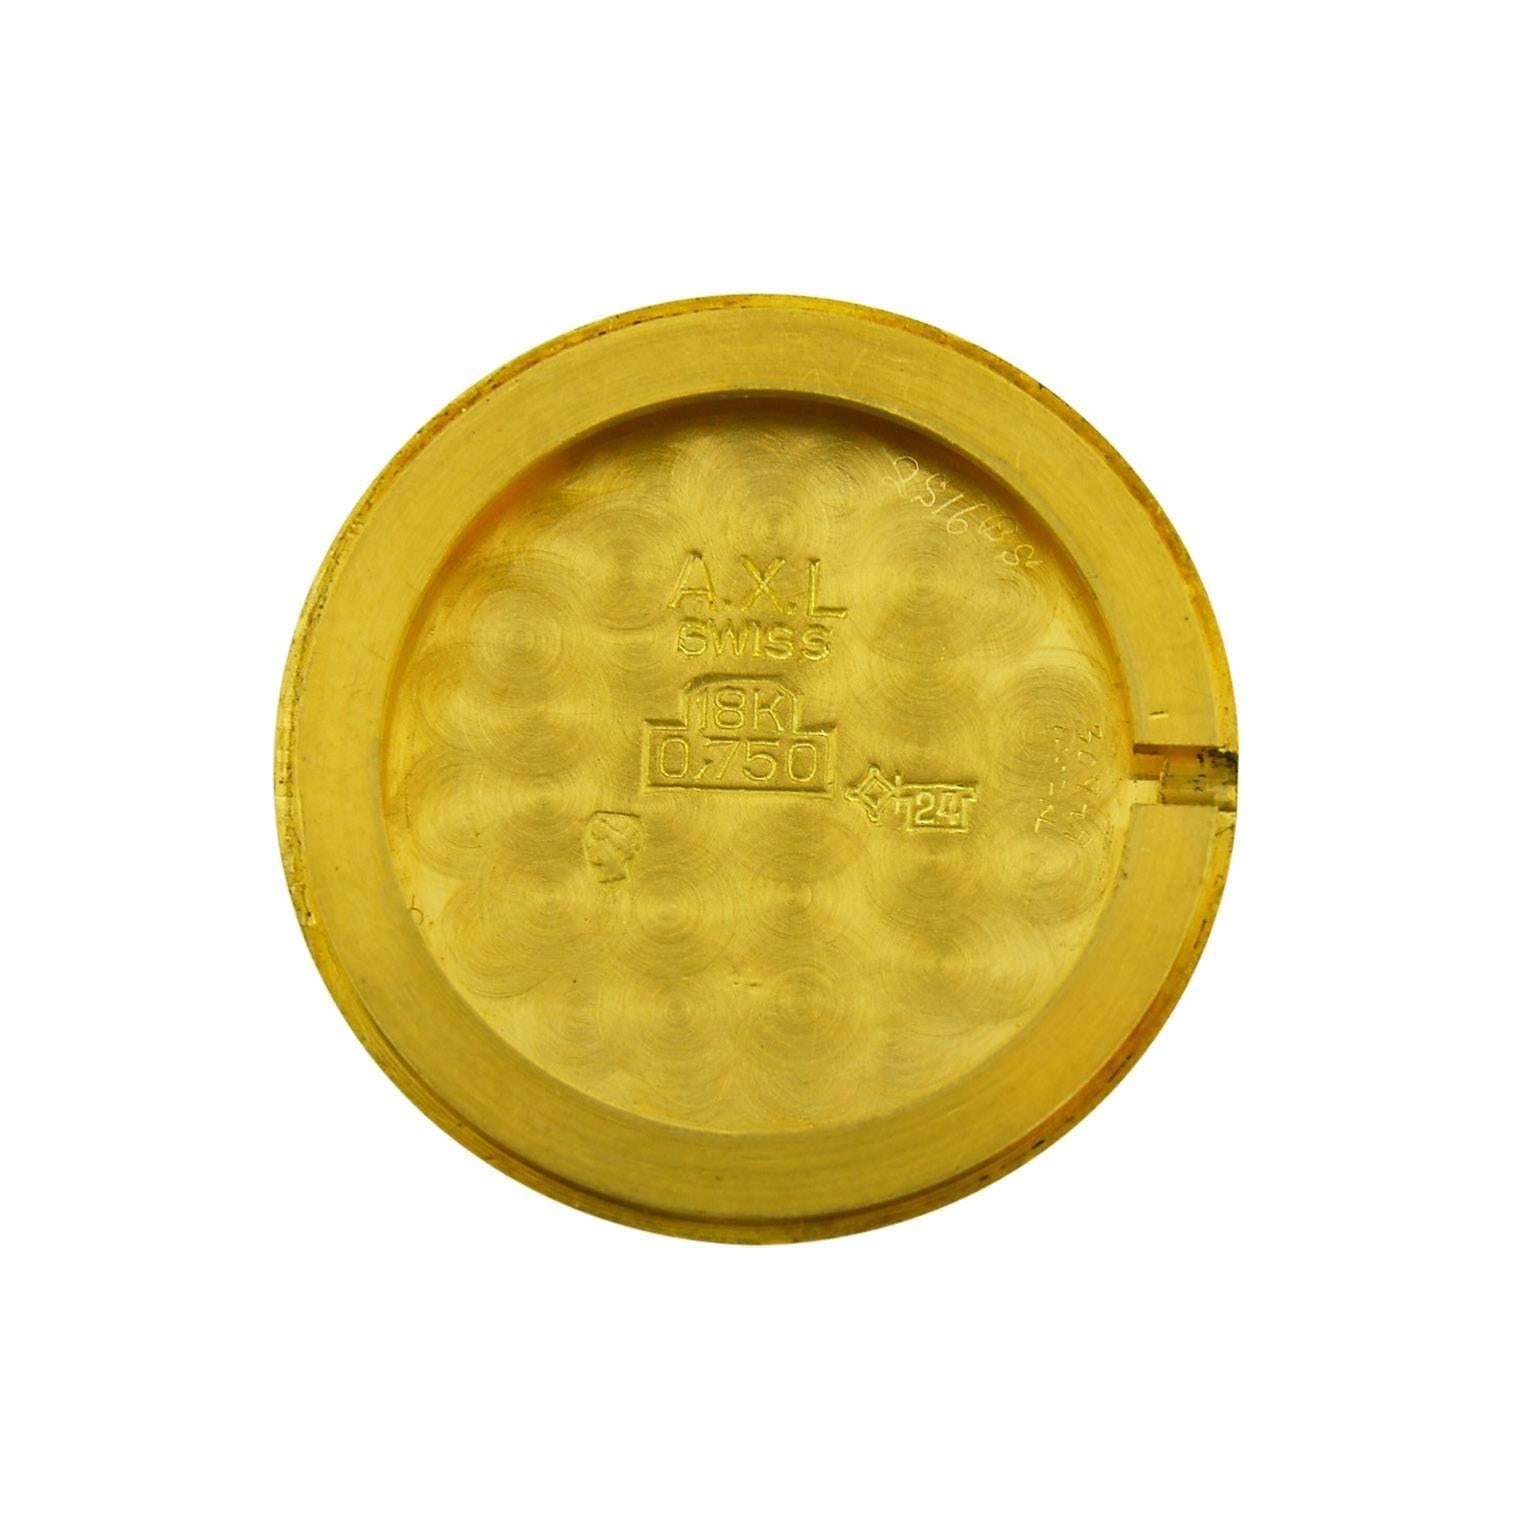 Cartier by Bueche Girod Yellow Gold Enamel Manual Wind Watch, circa 1970s For Sale 11